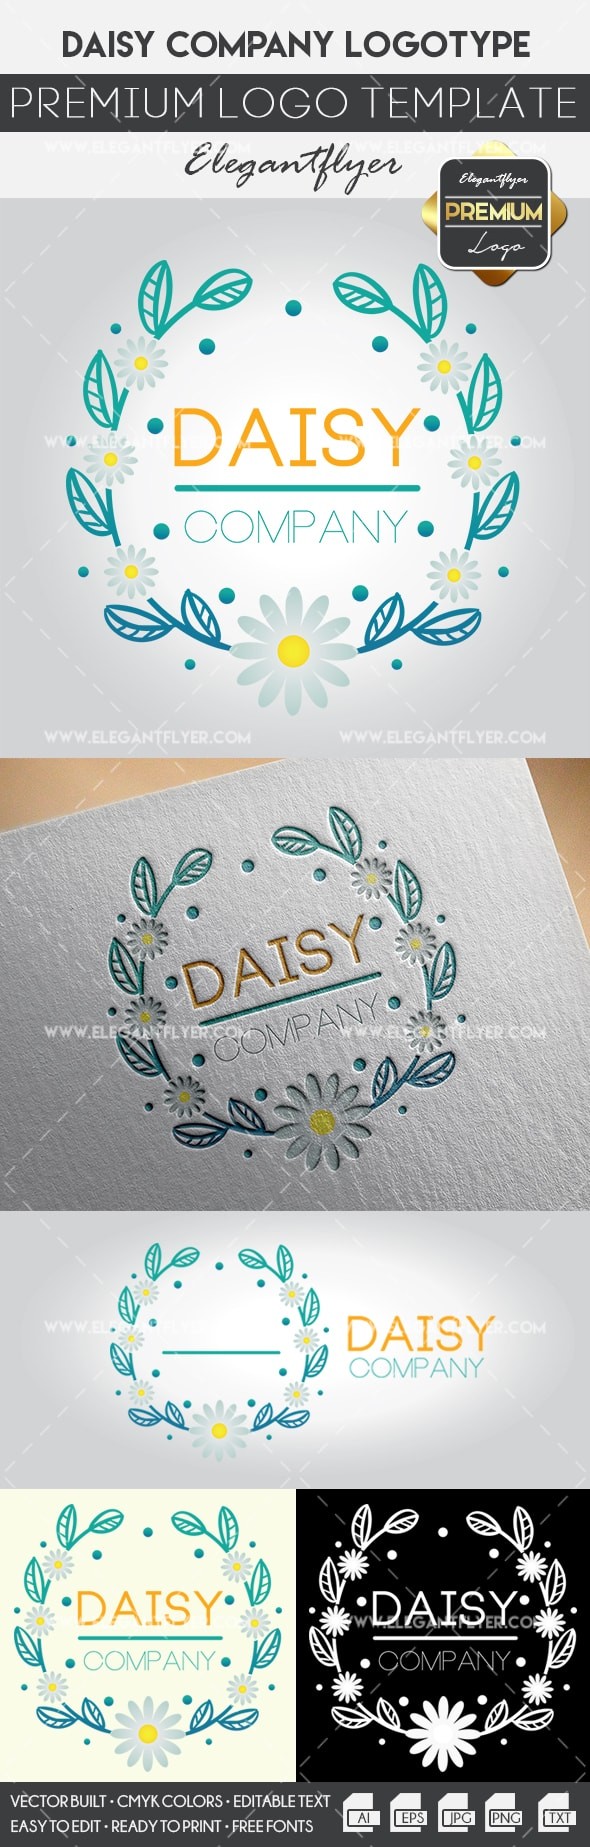 Compañía Daisy by ElegantFlyer